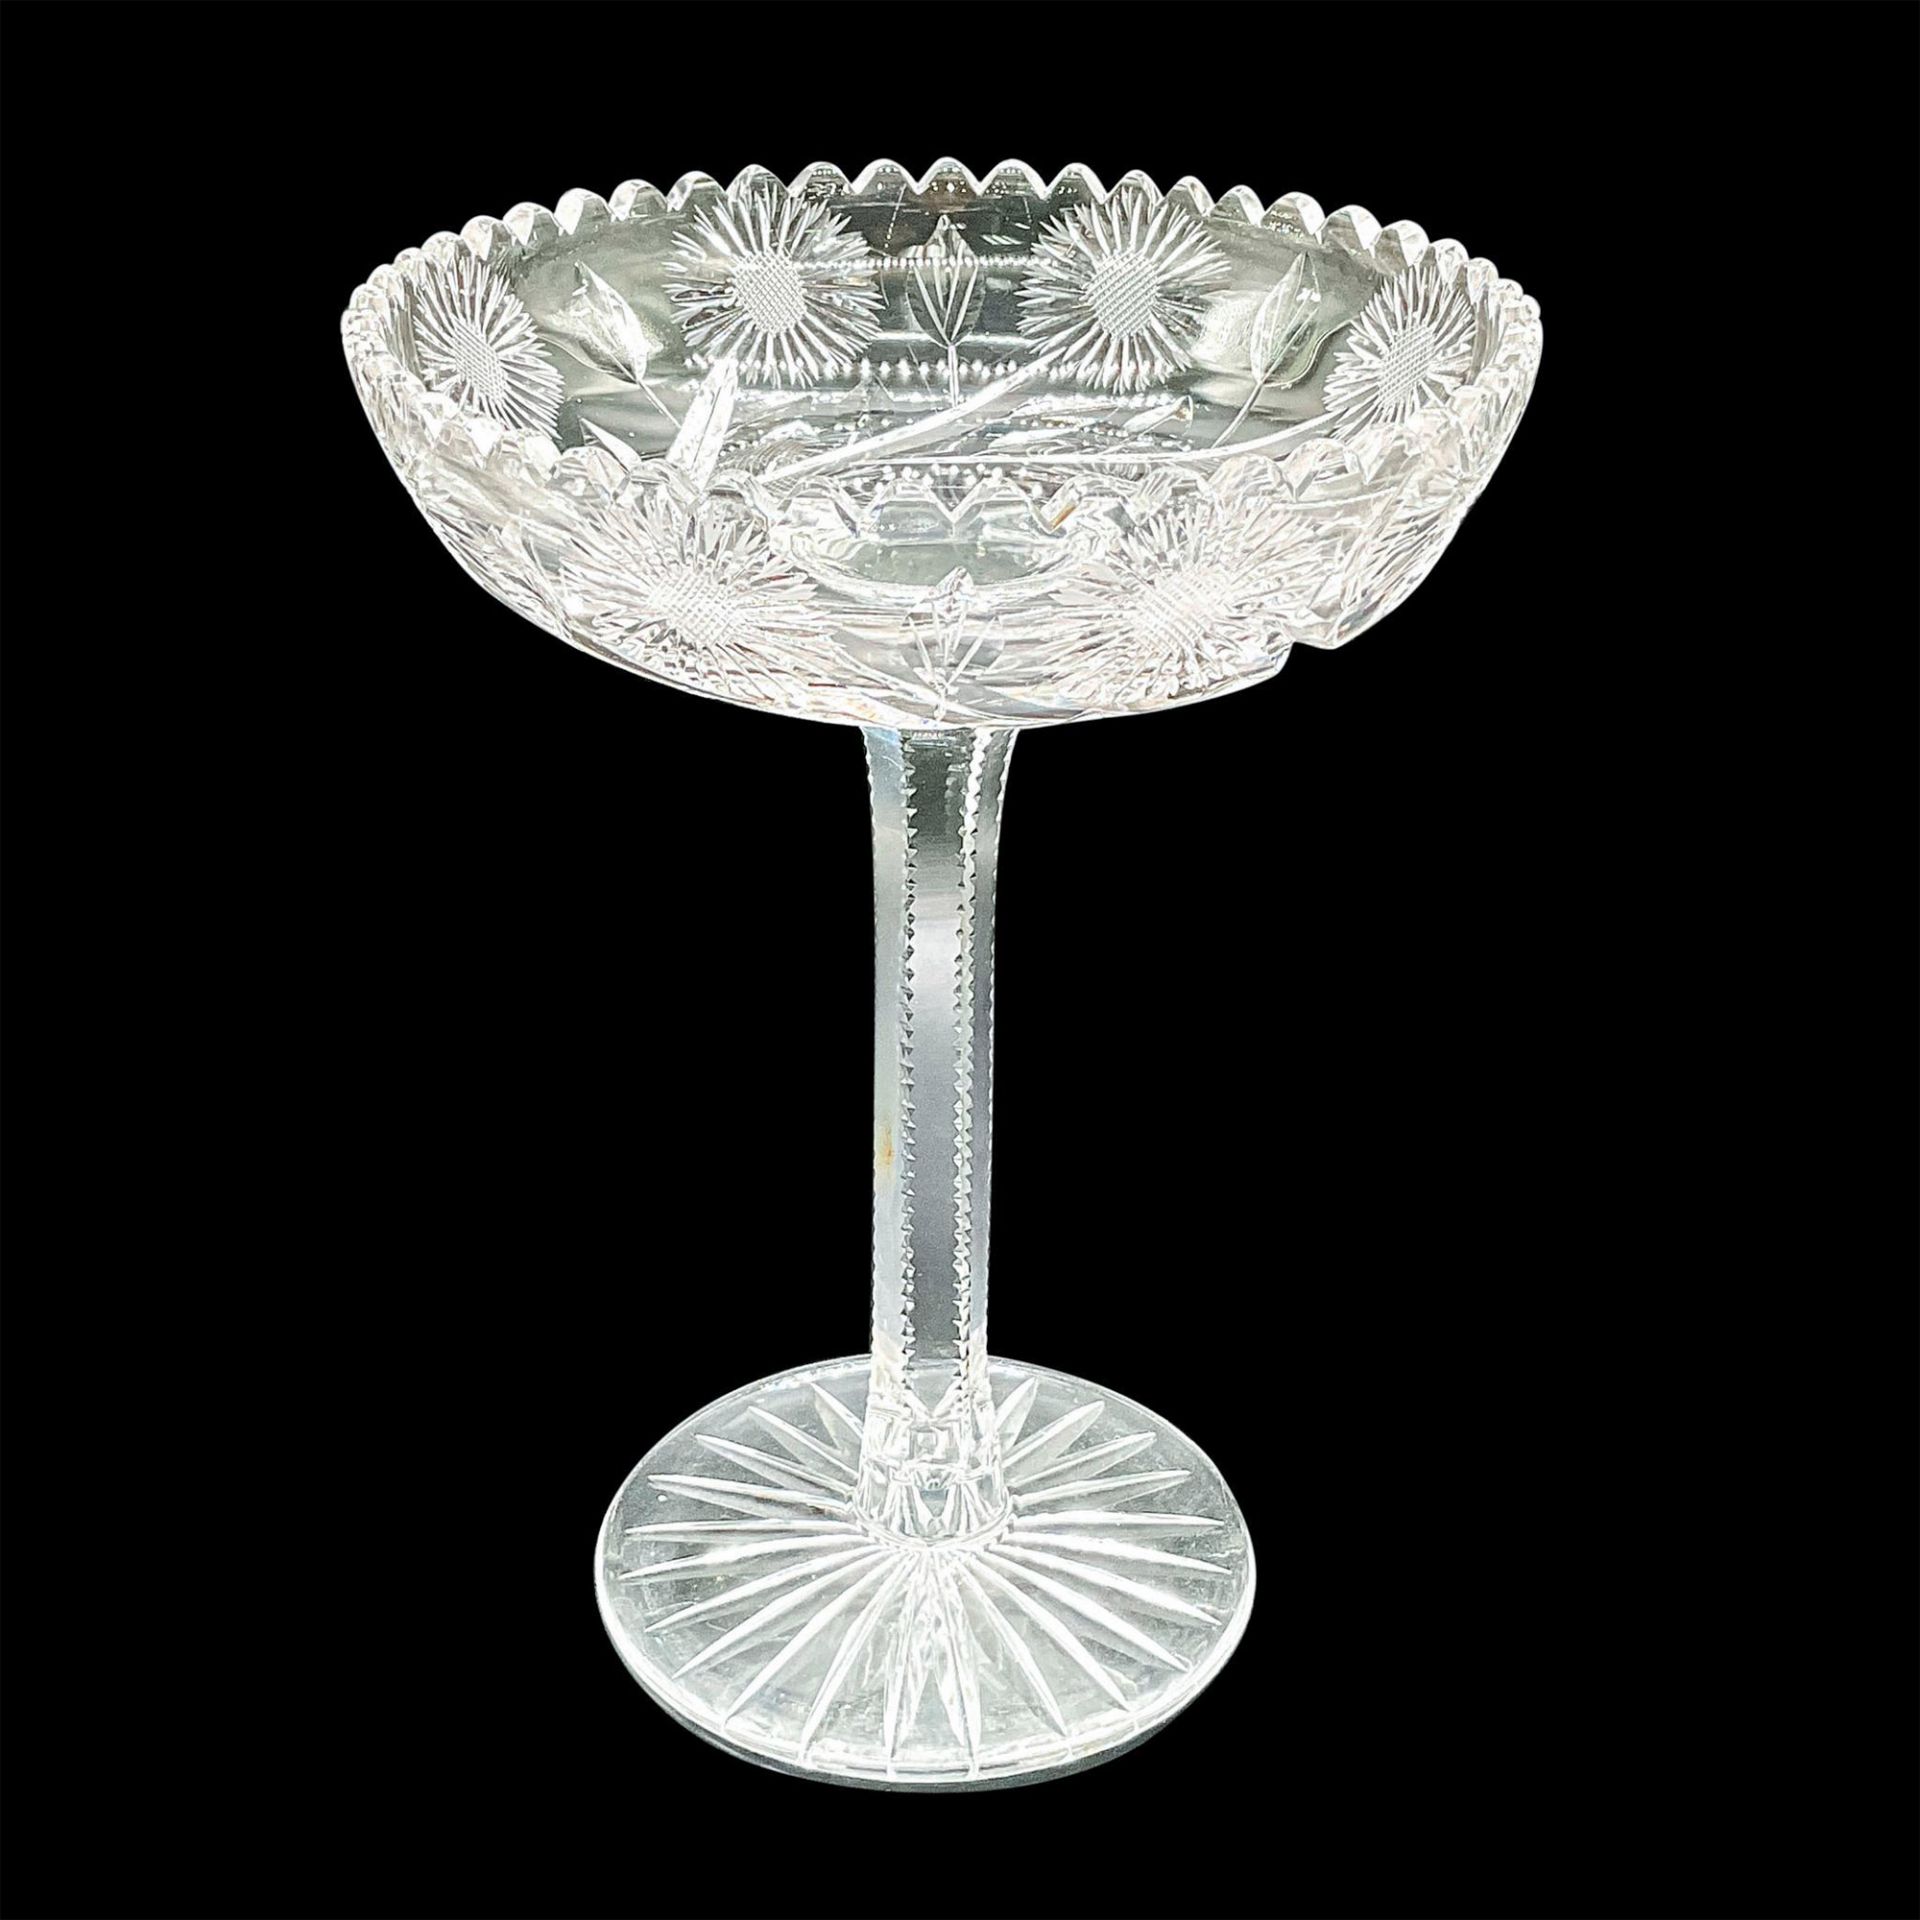 Vintage Floral Cut Glass Compote Bowl - Image 2 of 3